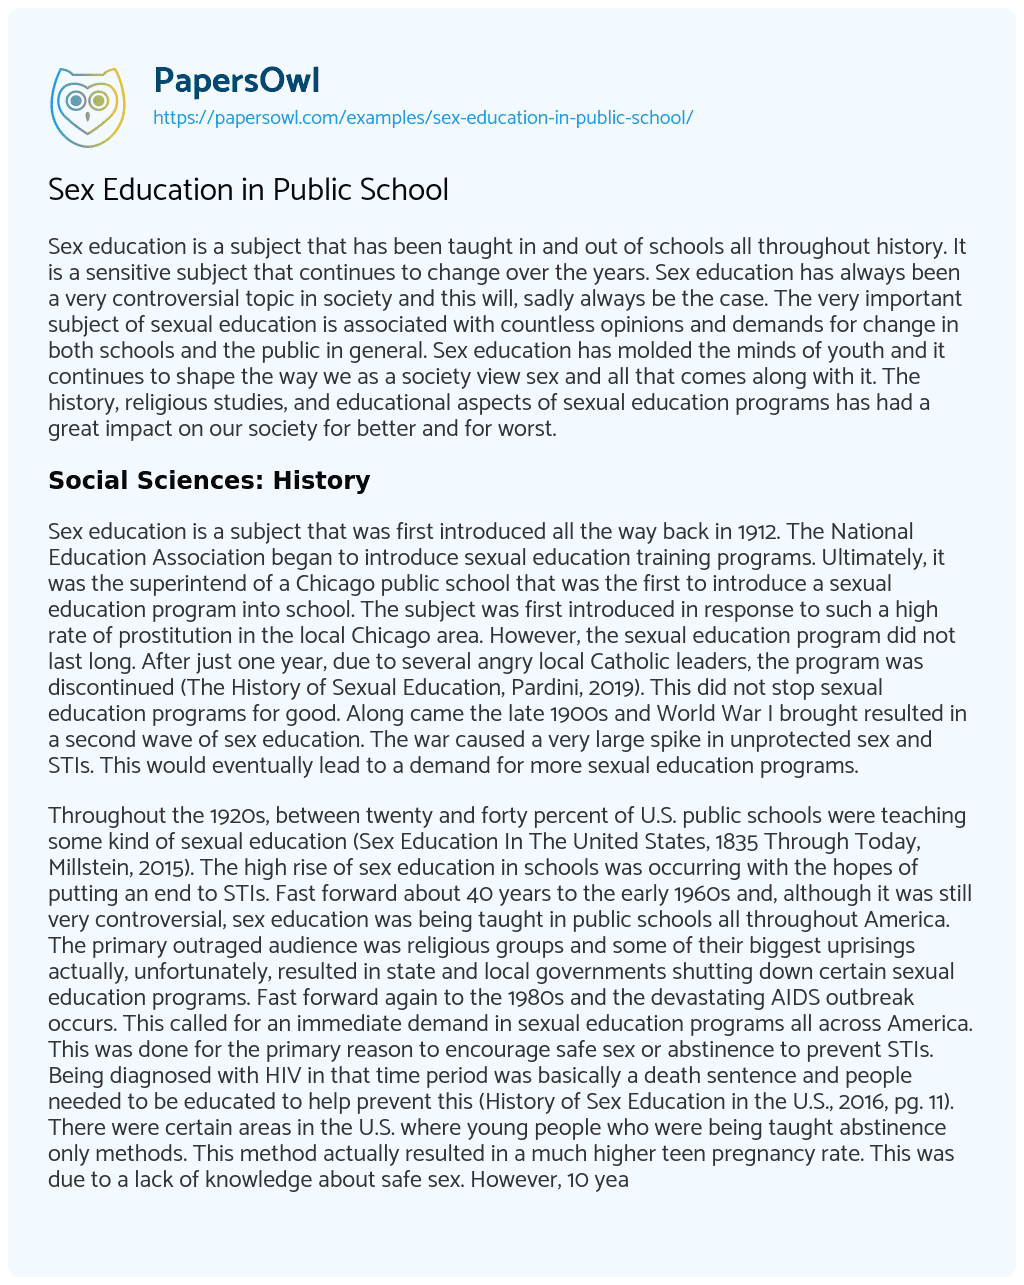 Essay on Sex Education in Public School